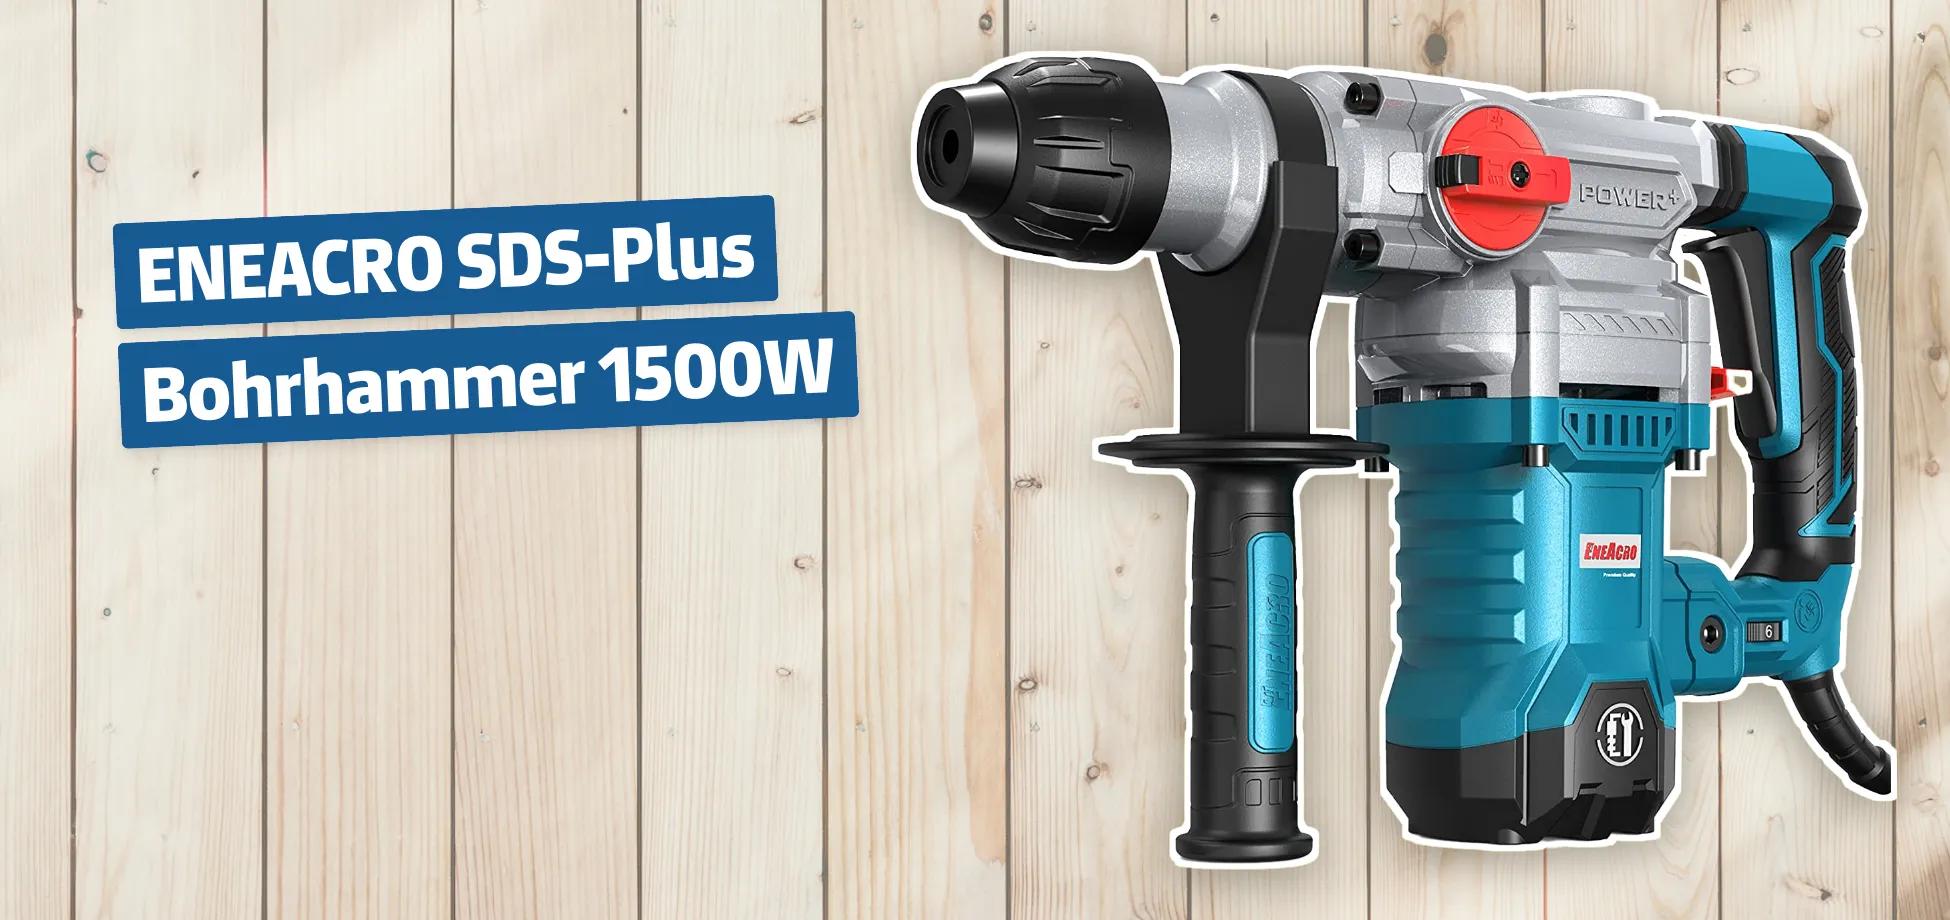 ENEACRO SDS-Plus Bohrhammer 1500W